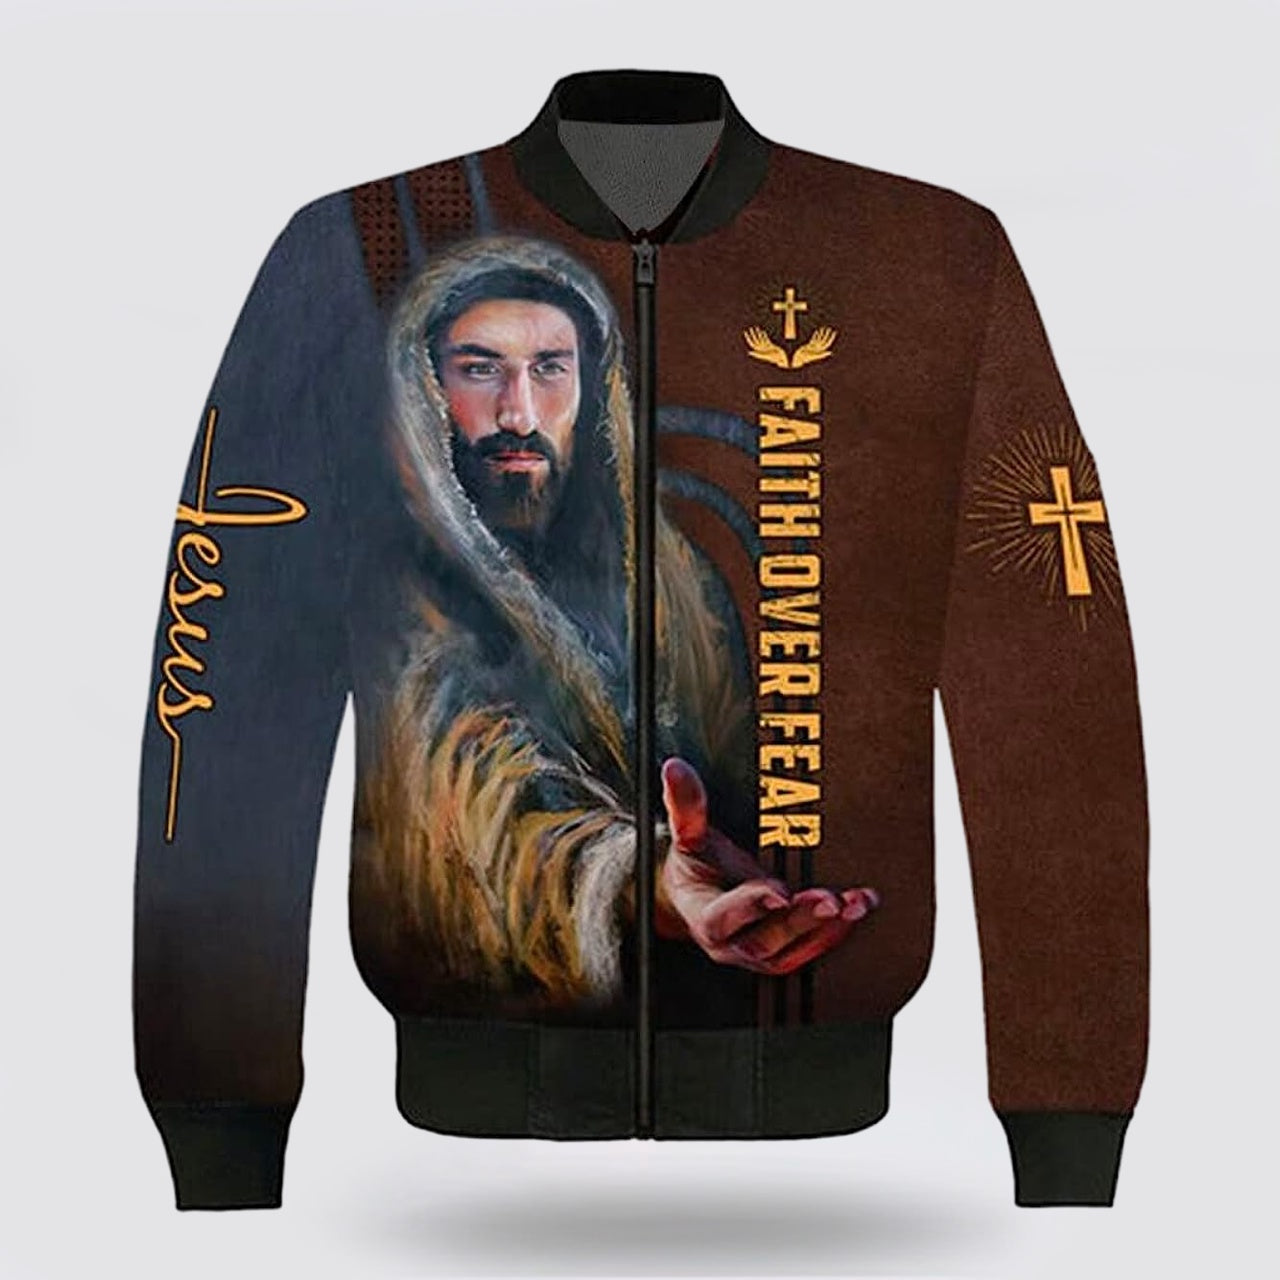 Jesus Christian Faith Over Fear Bomber Jacket - Christian Bomber Shirts for Men and Women